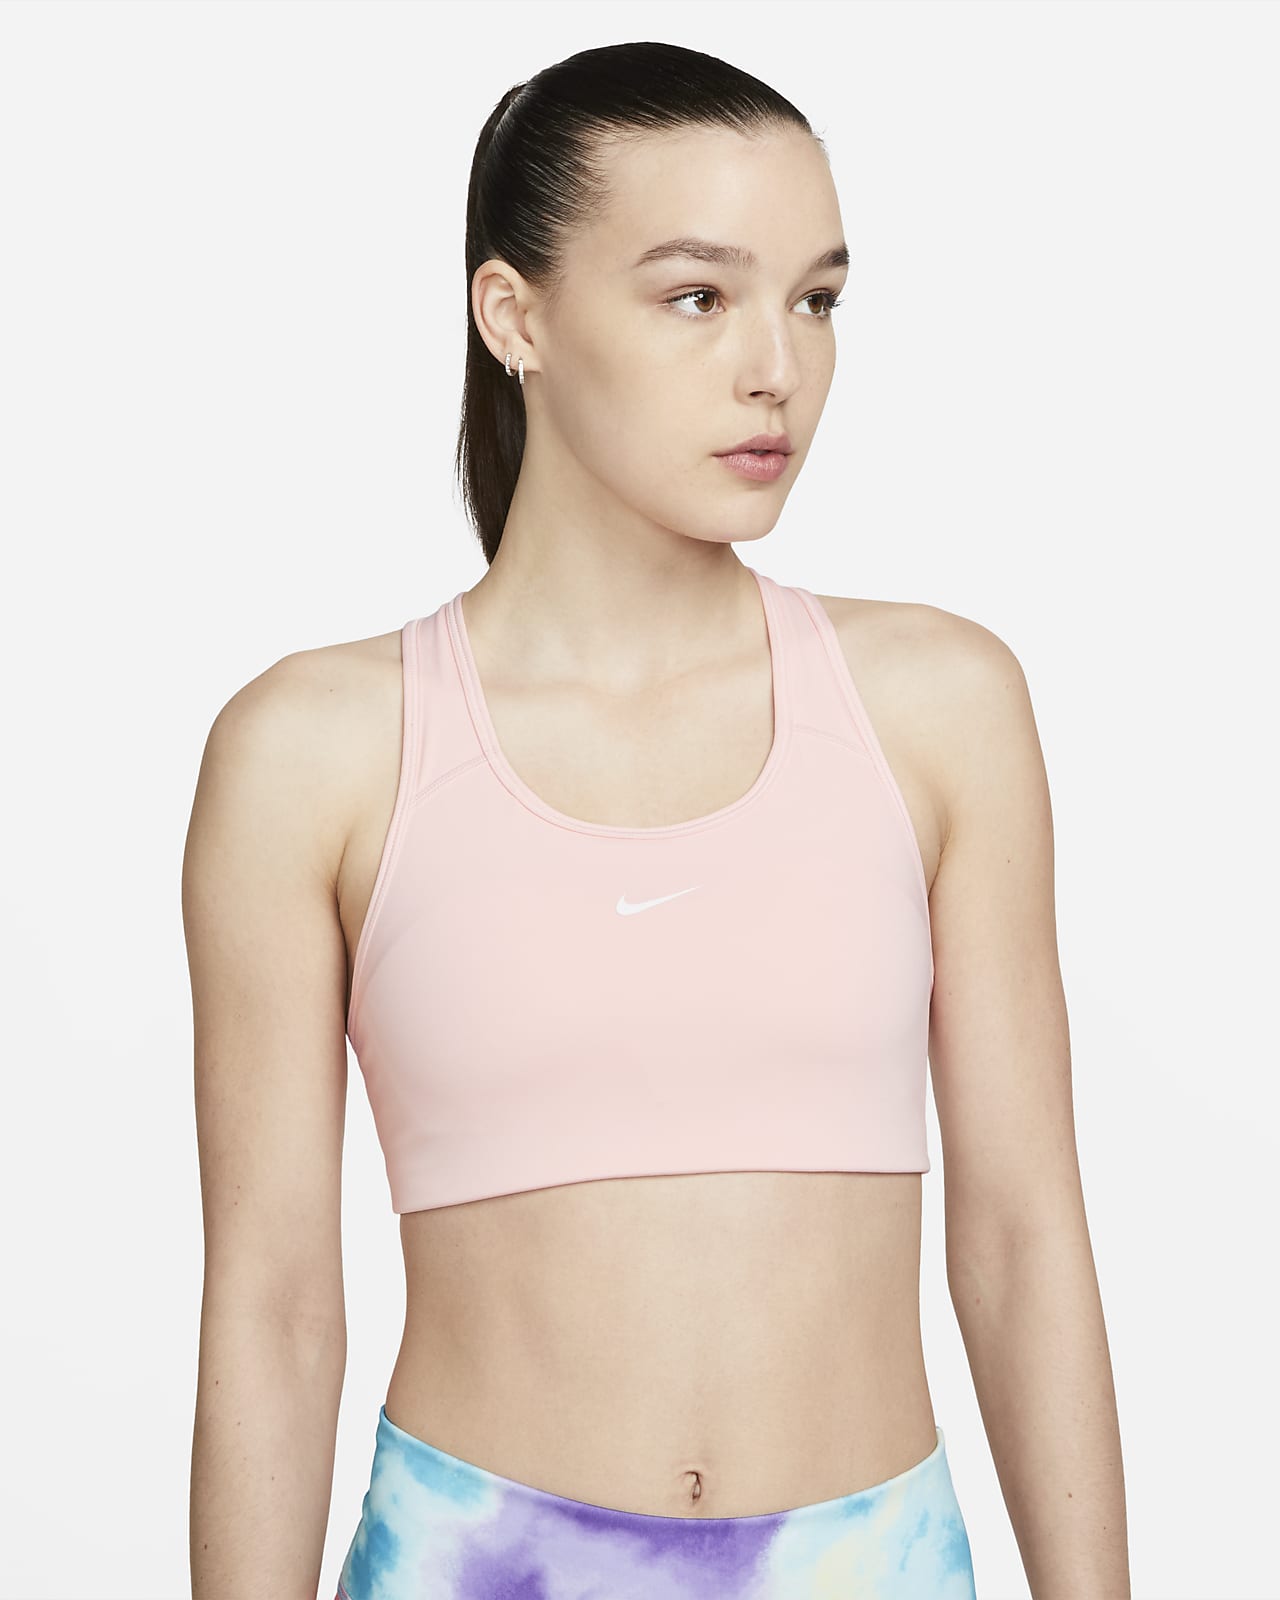 Nike Swoosh 女款中度支撐型一片式襯墊運動內衣